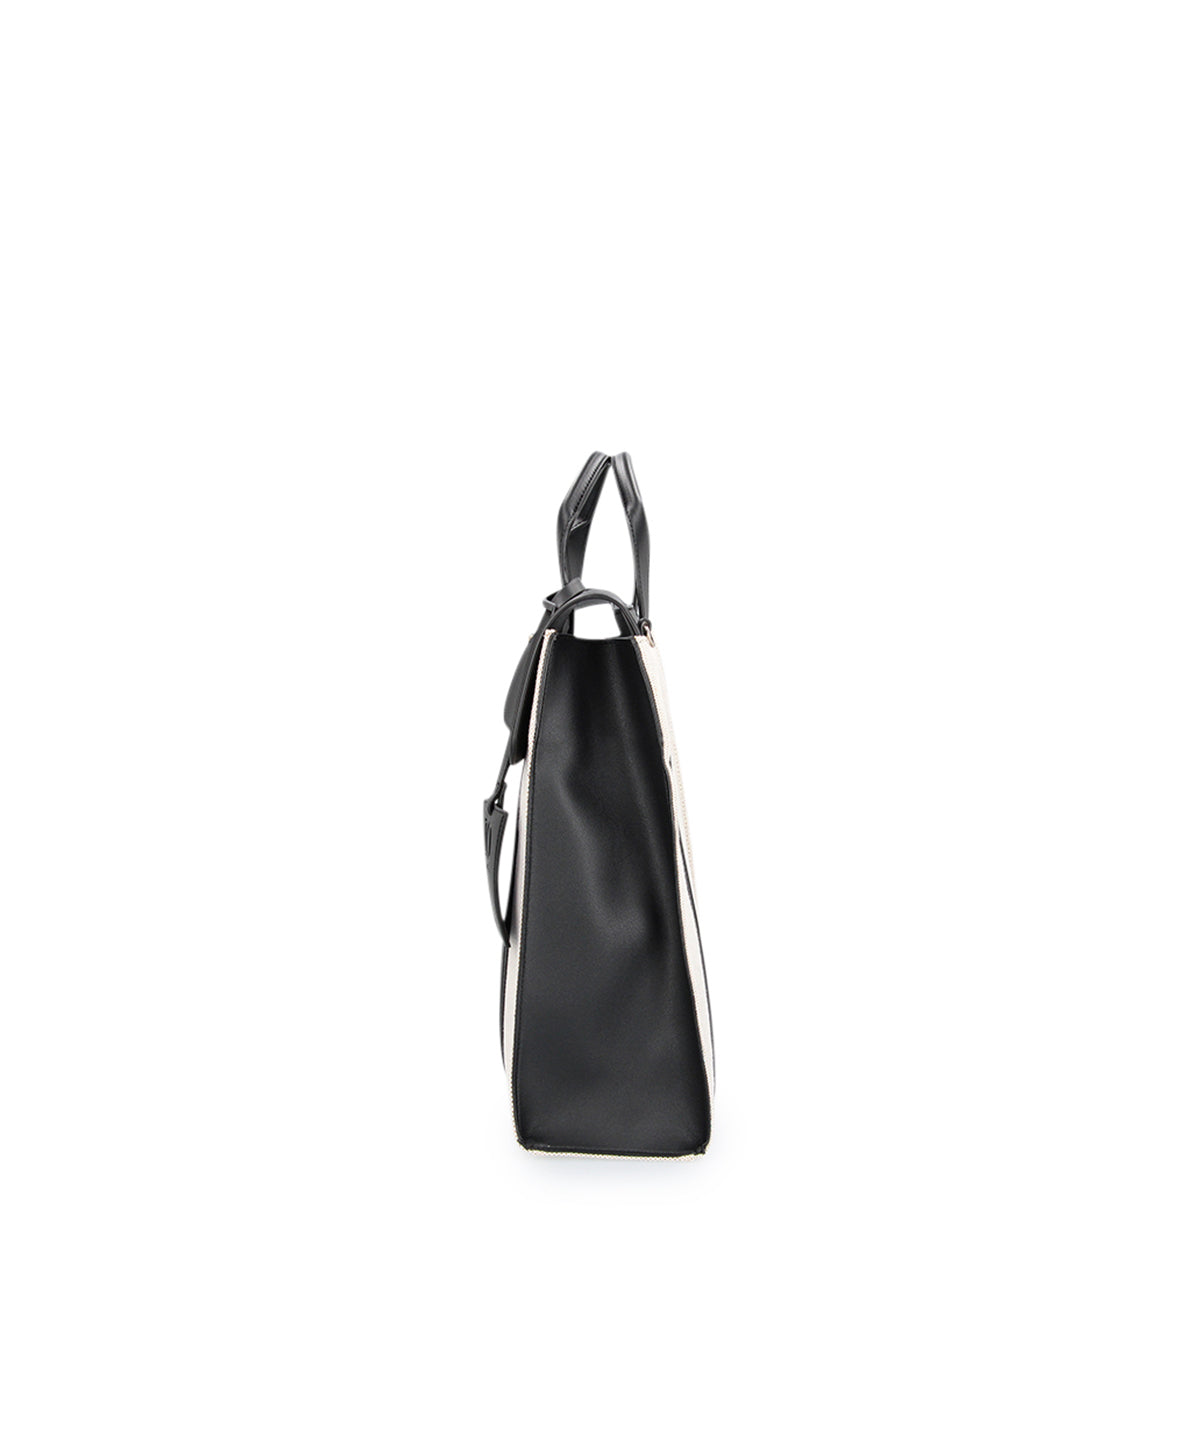 Two Tone Kente Shoulder Bag (Medium)BLACK